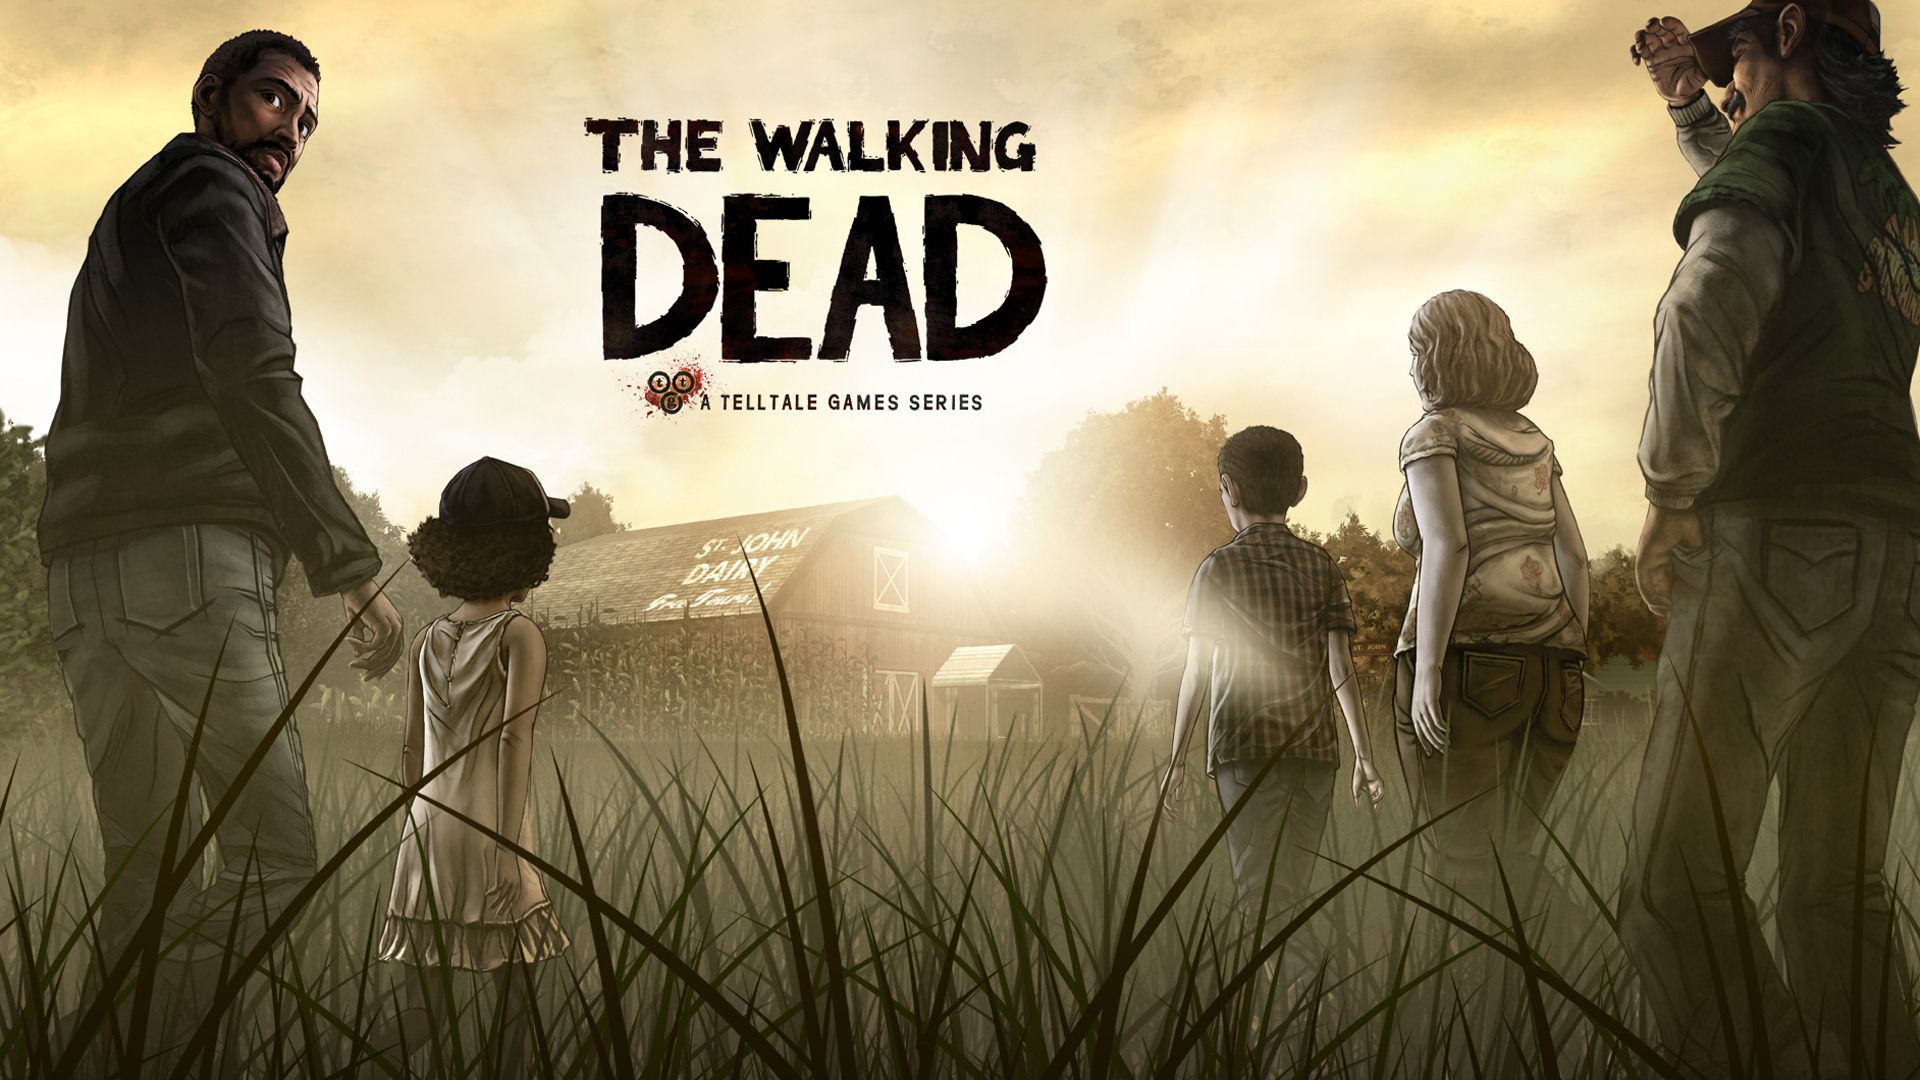 The Walking Dead HD Wallpapers for desktop download